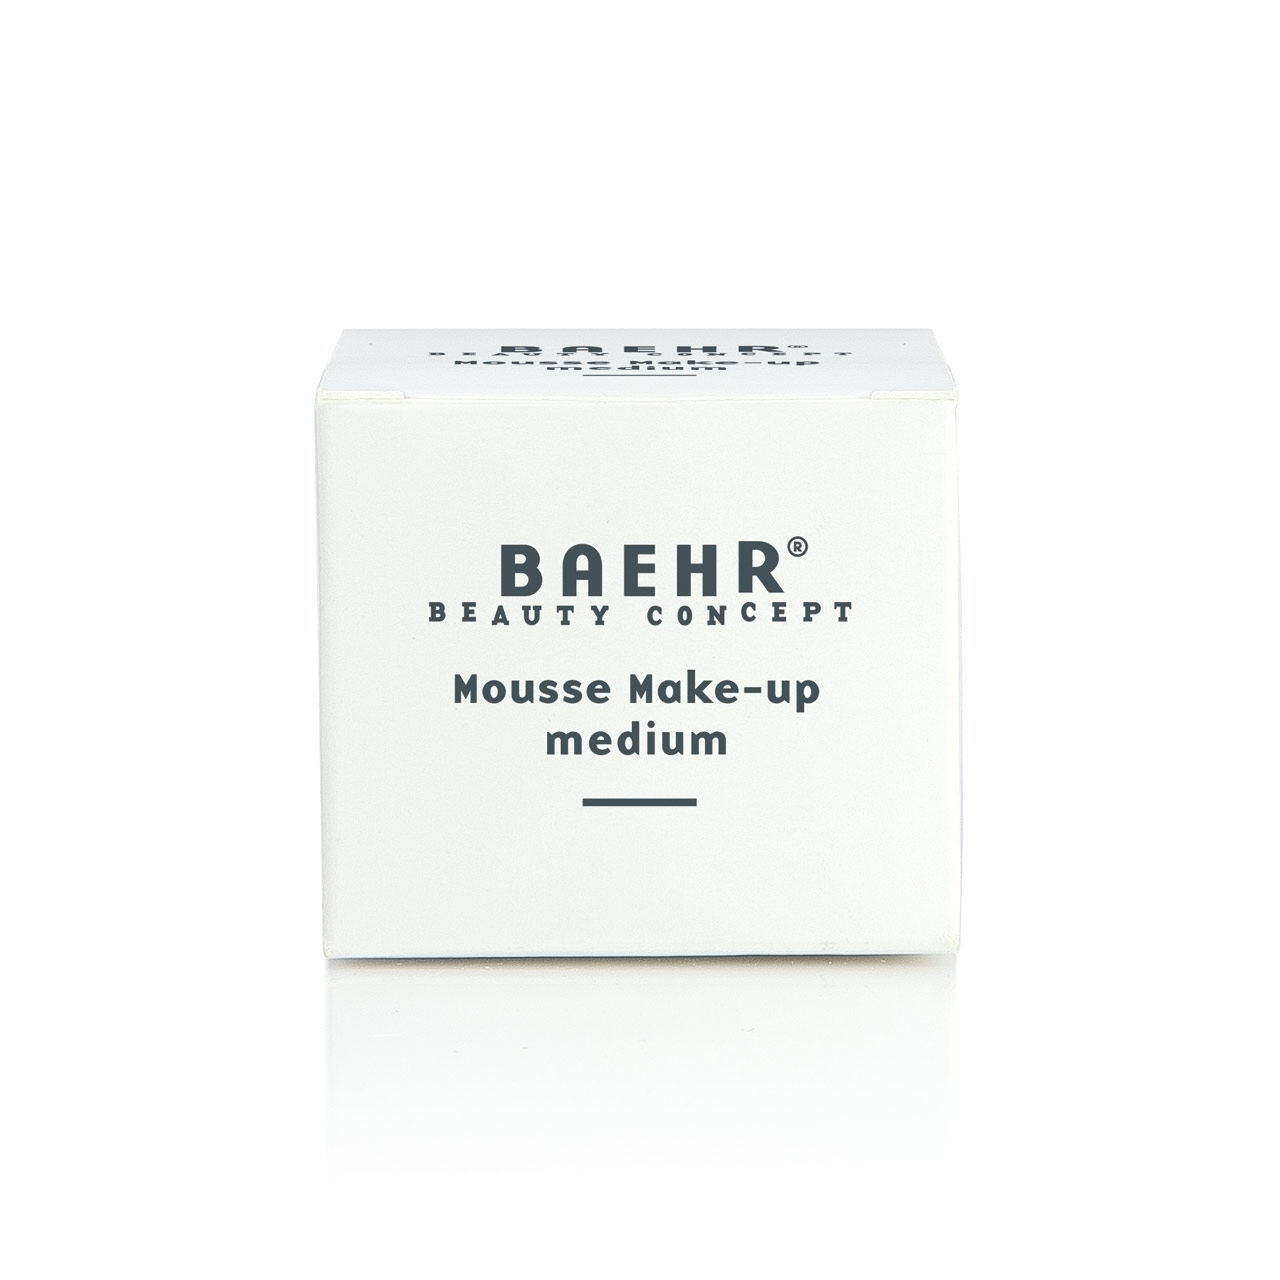 BAEHR BEAUTY CONCEPT - Mousse Make-up medium, 15 ml